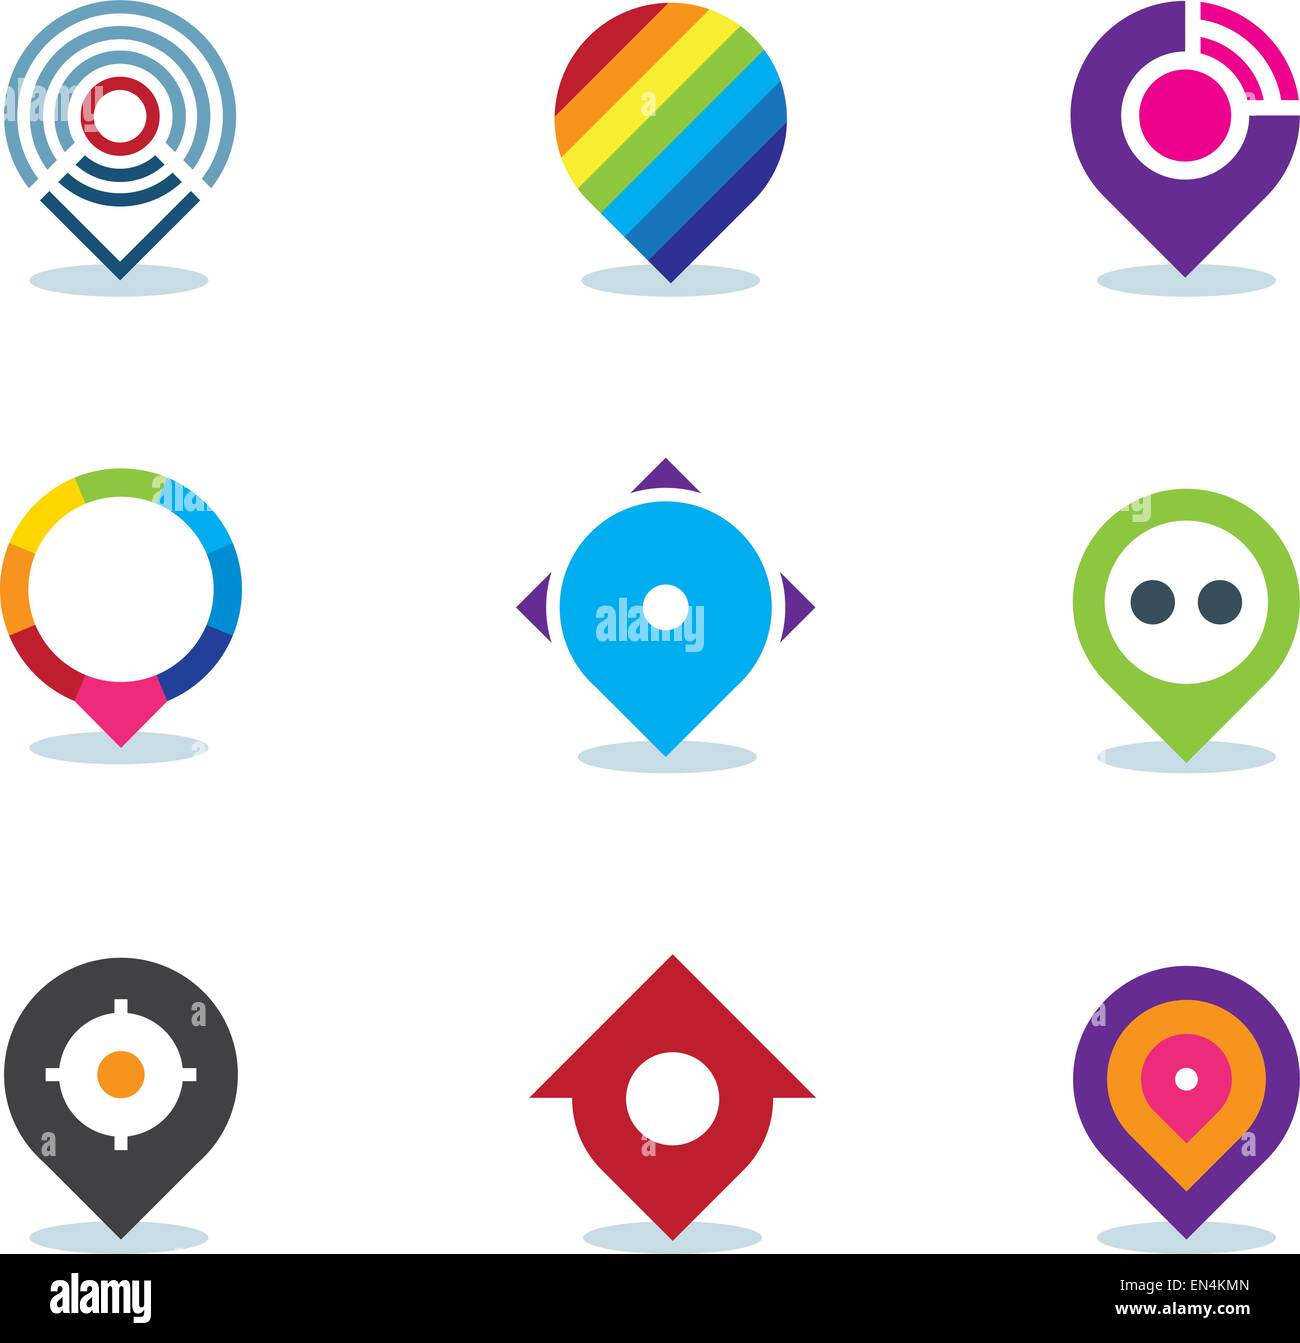 Modernen Welt app Rahmenposition Locator Gemeinschaft Internet Medien Logo Symbol Stock Vektor